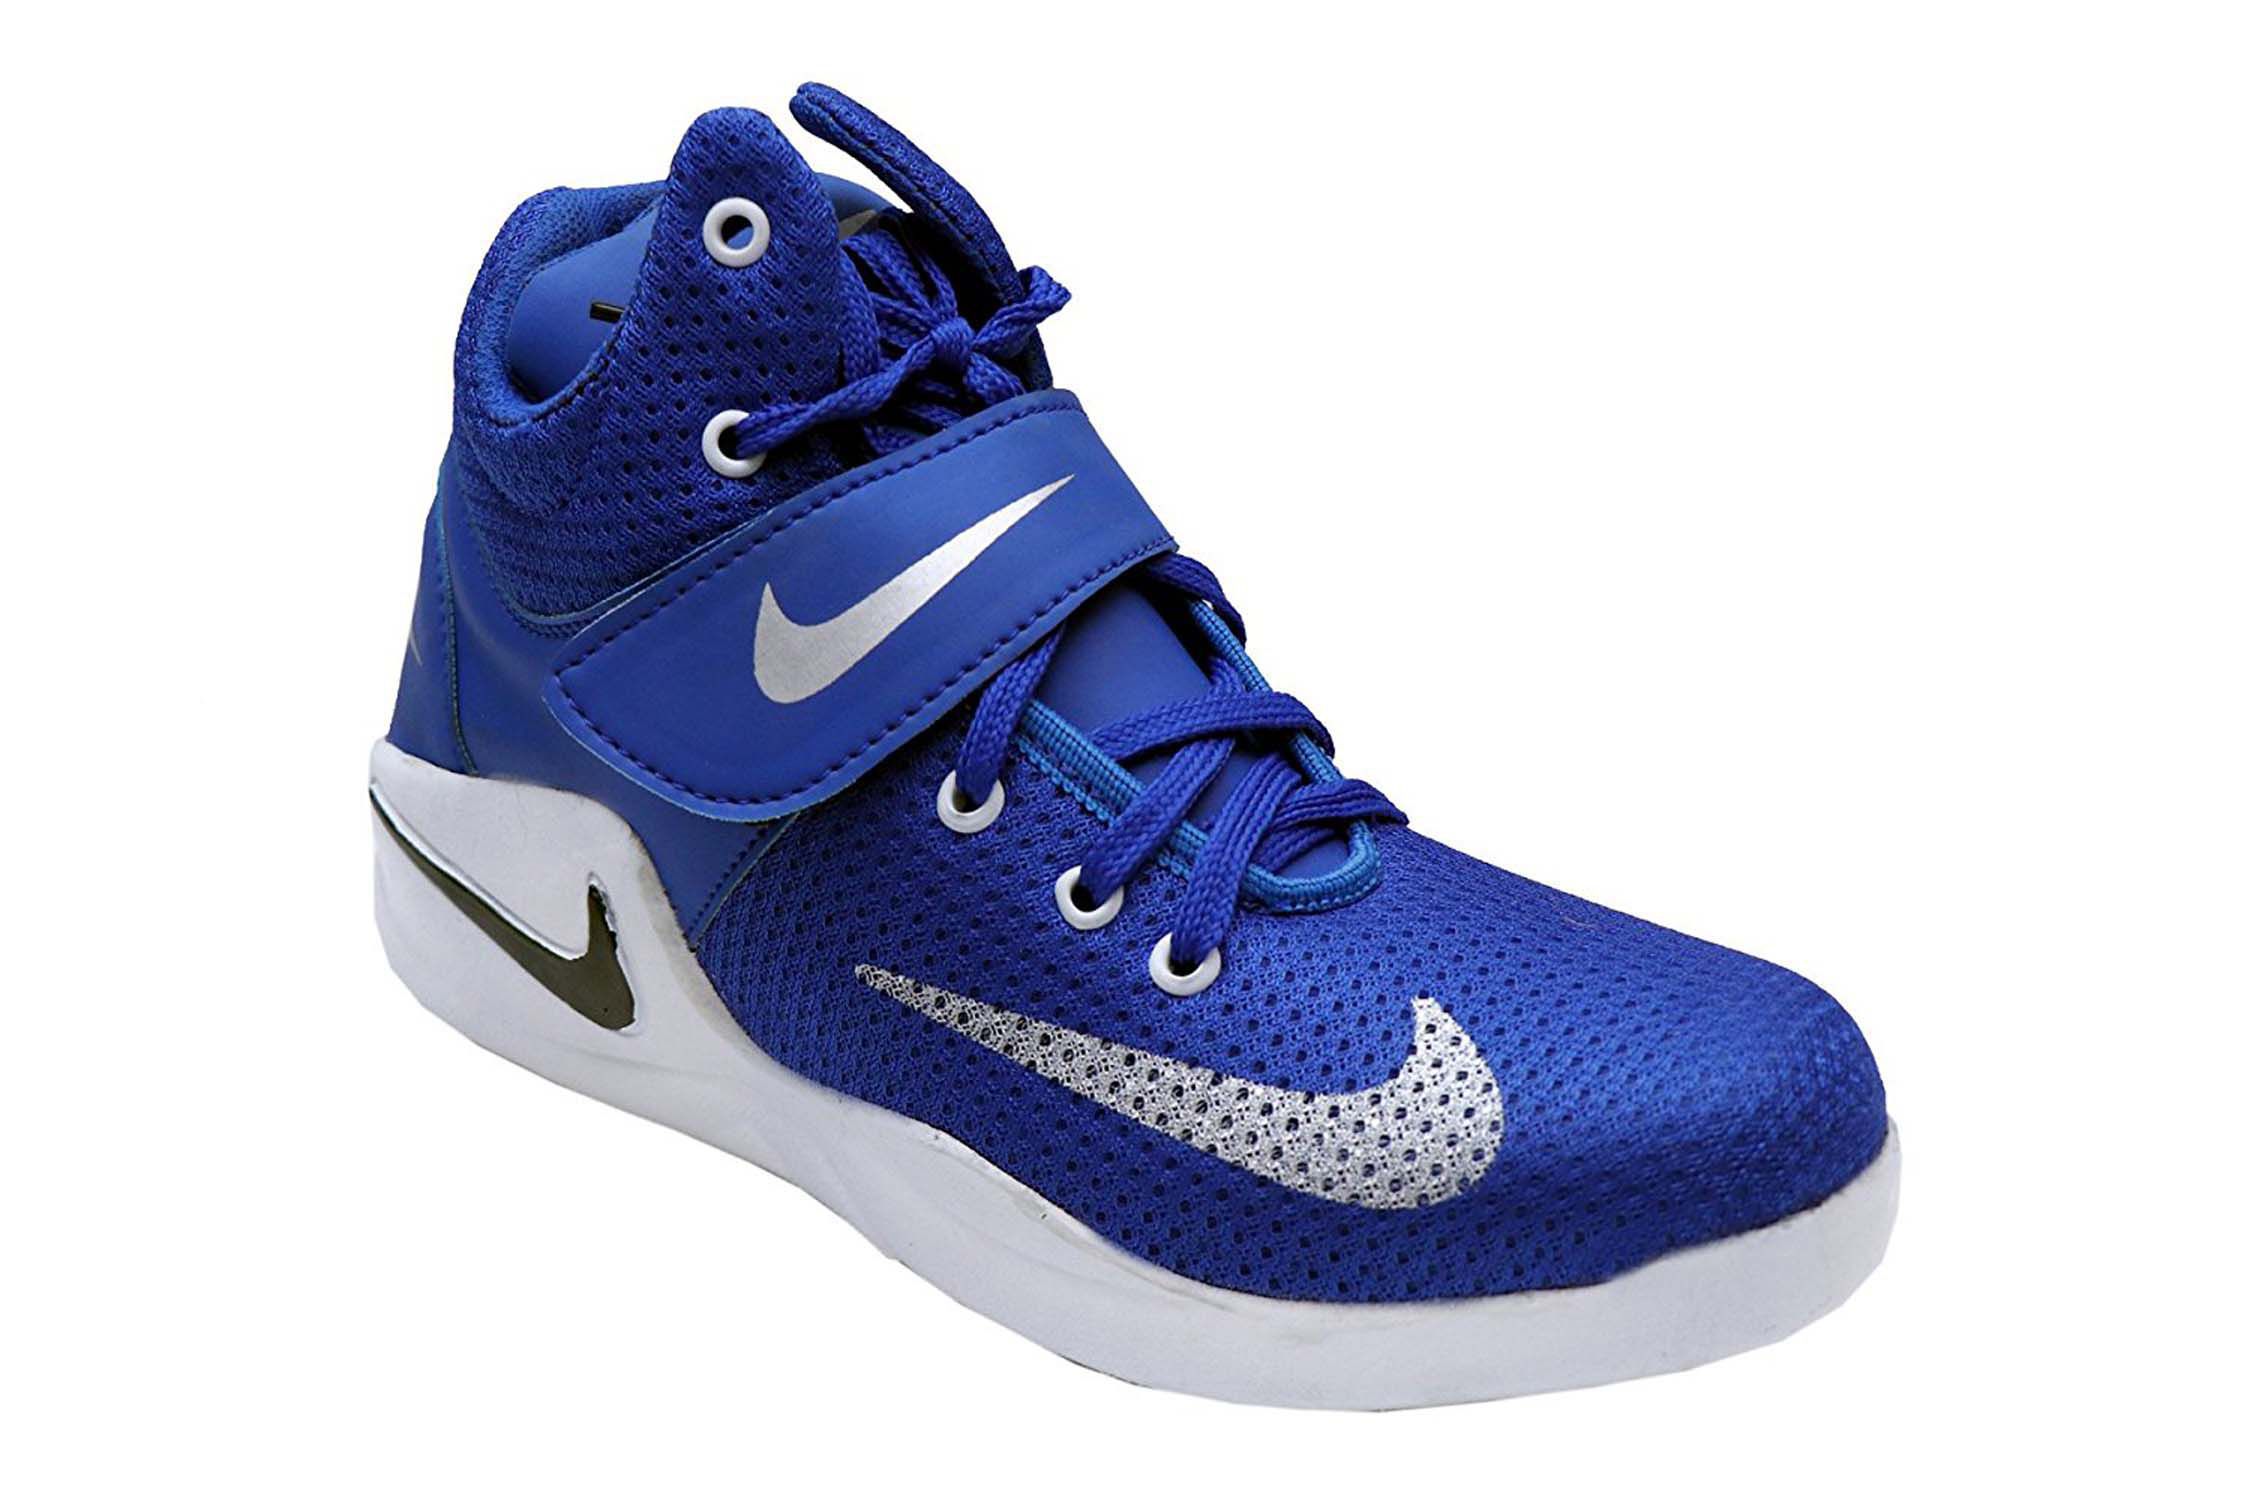 QUALIDA Blue Basketball Shoes - Buy QUALIDA Blue Basketball Shoes ...